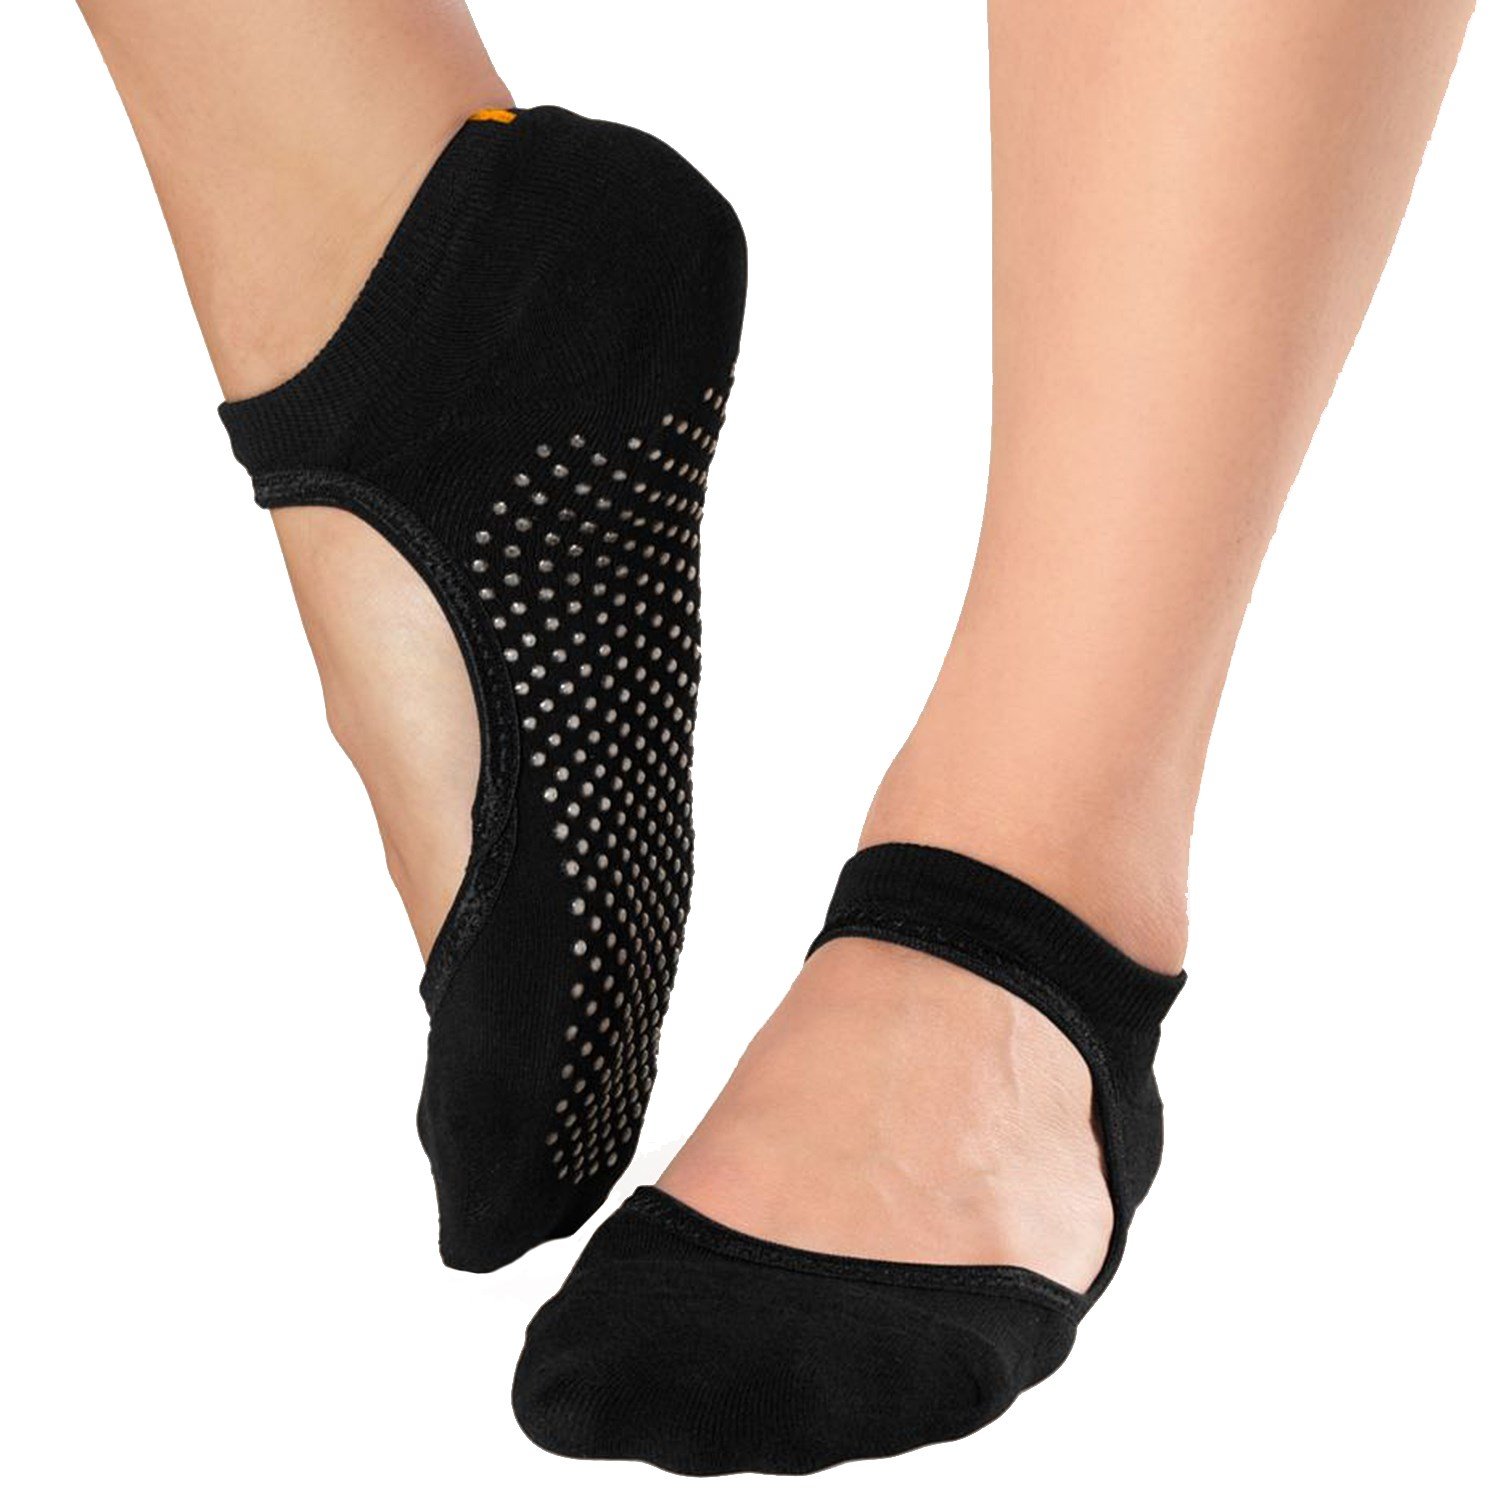 https://images.evo.com/imgp/zoom/85794/399867/lucy-ballet-grip-socks-women-s--front.jpg